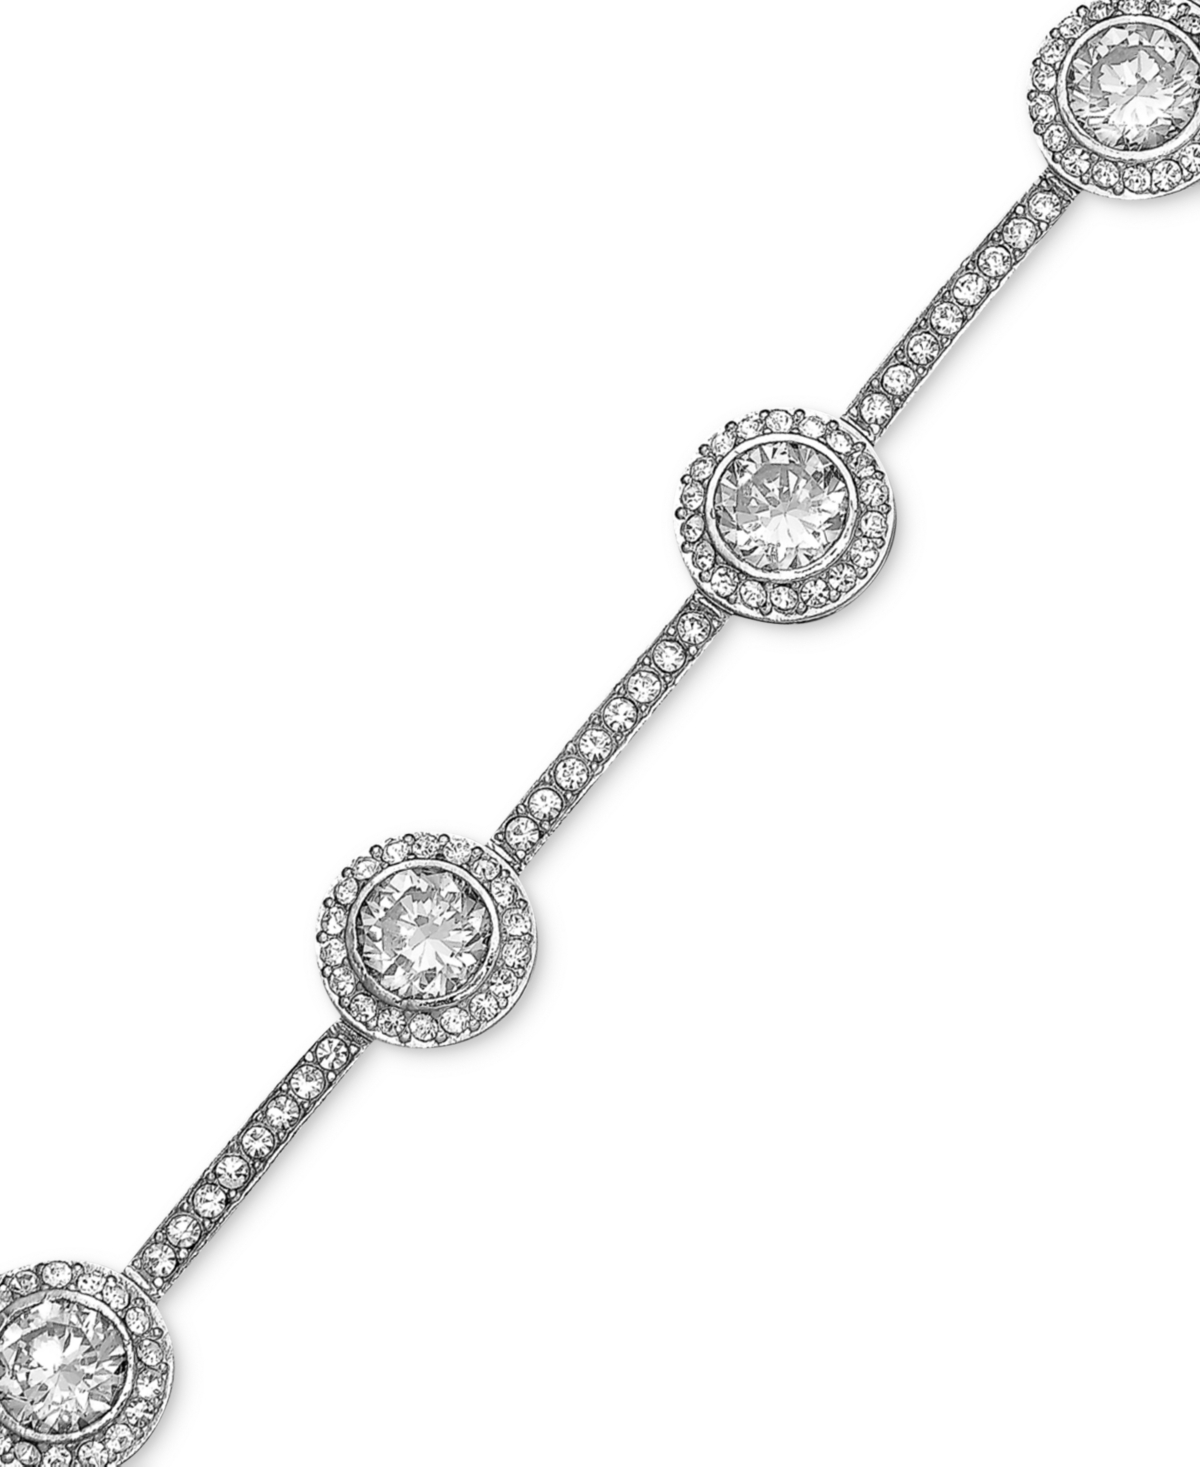 Eliot Danori Crystal Accent Bracelet, Created for Macy's